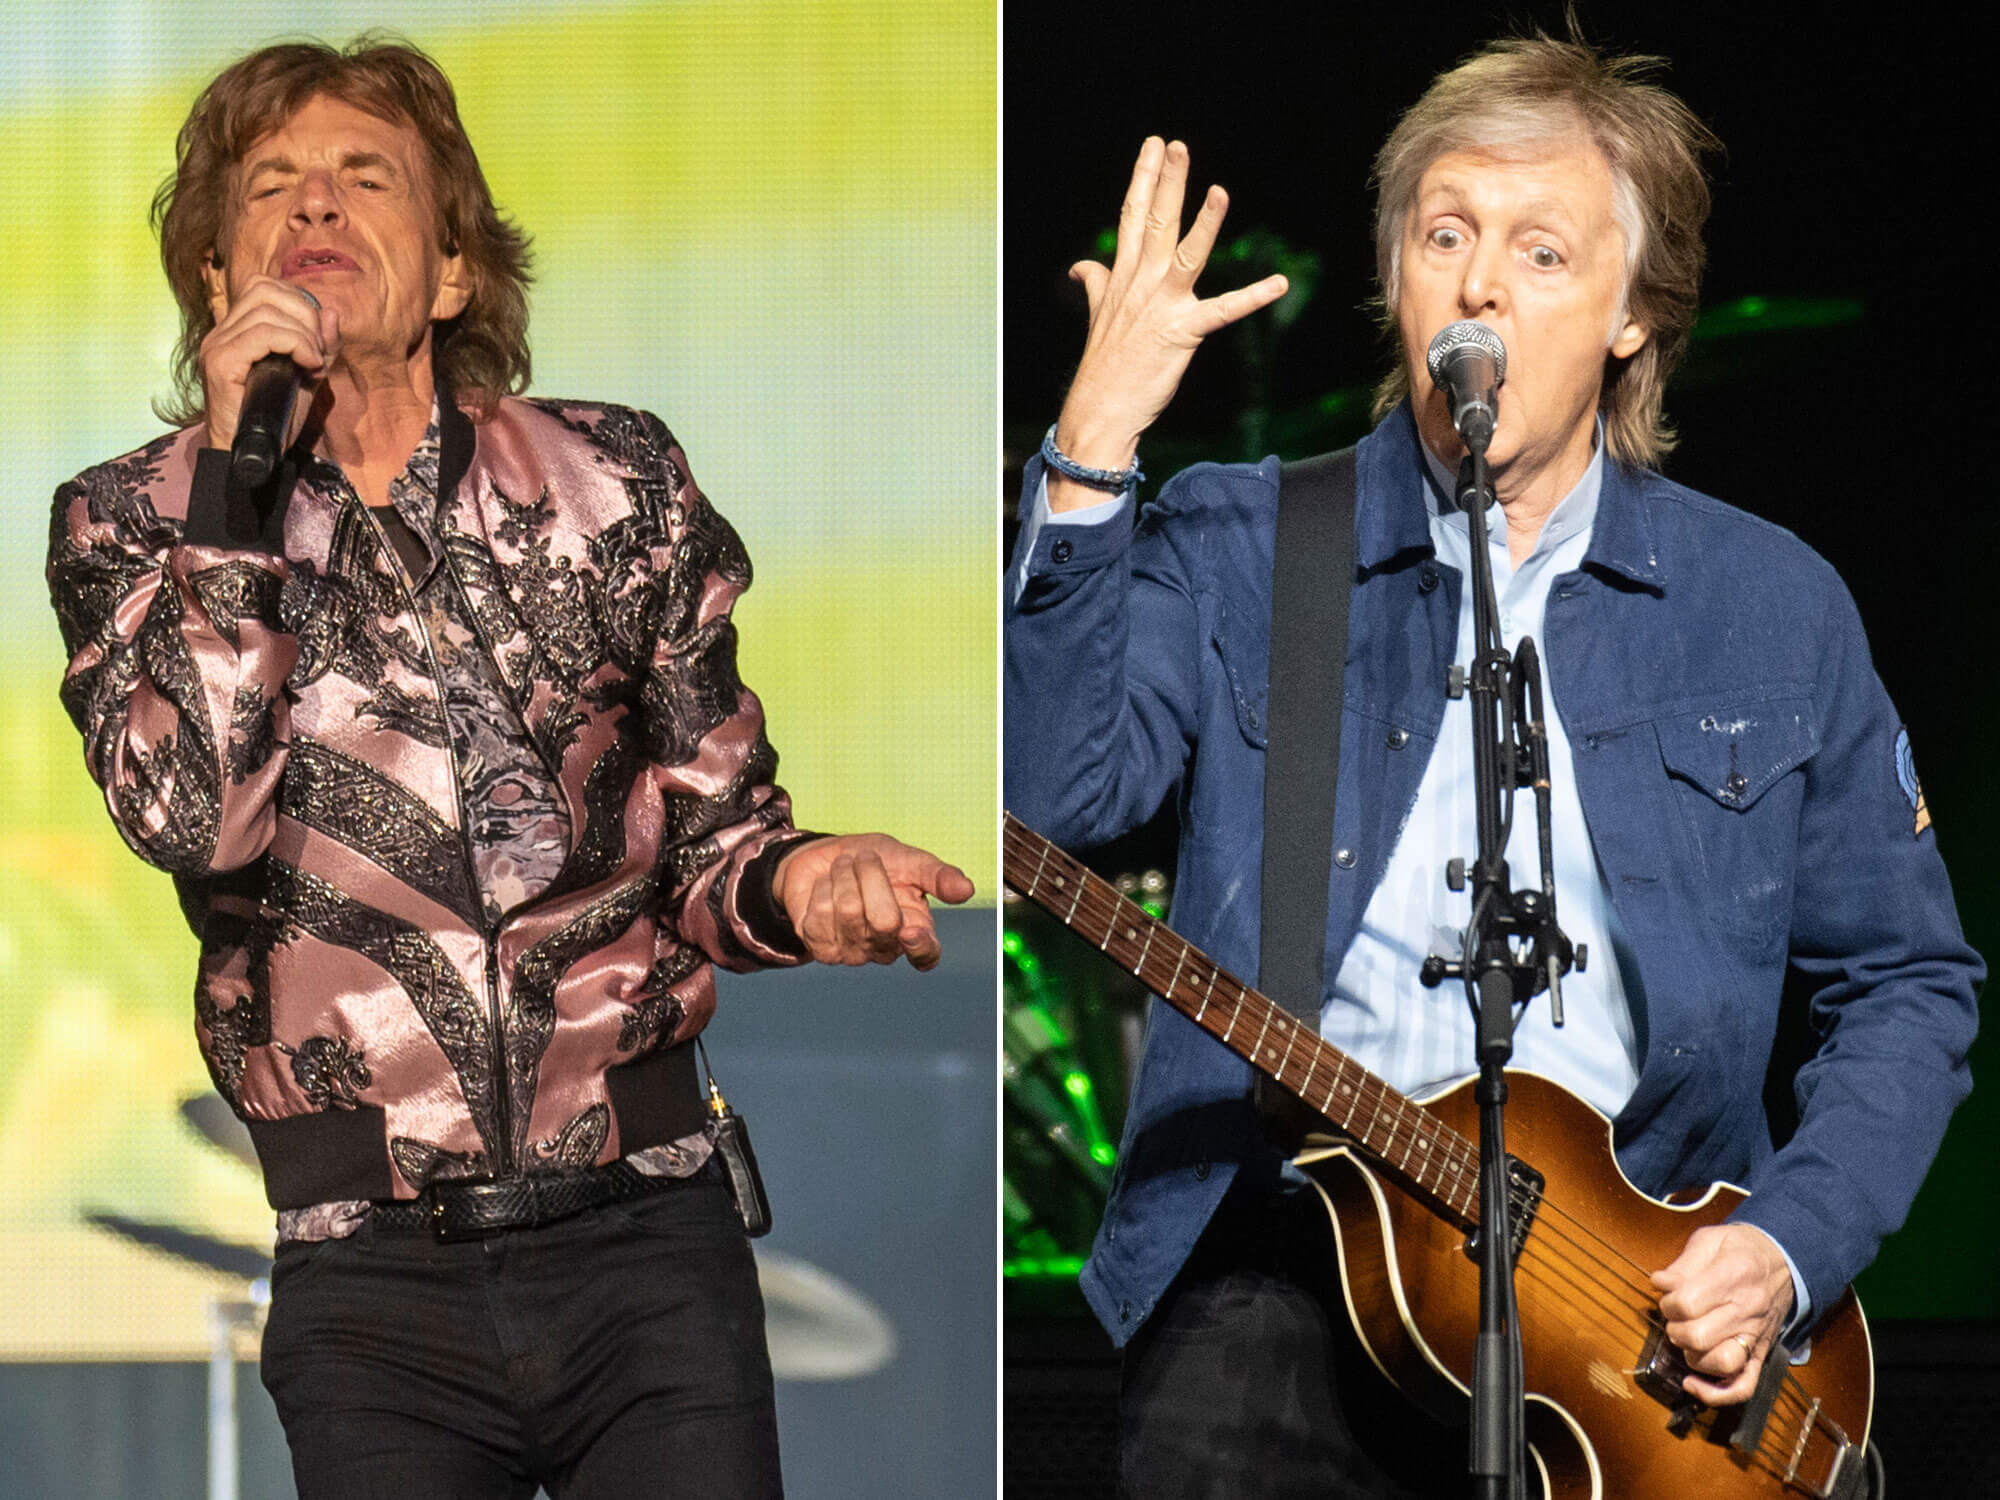 [L-R] Mick Jagger and Paul McCartney